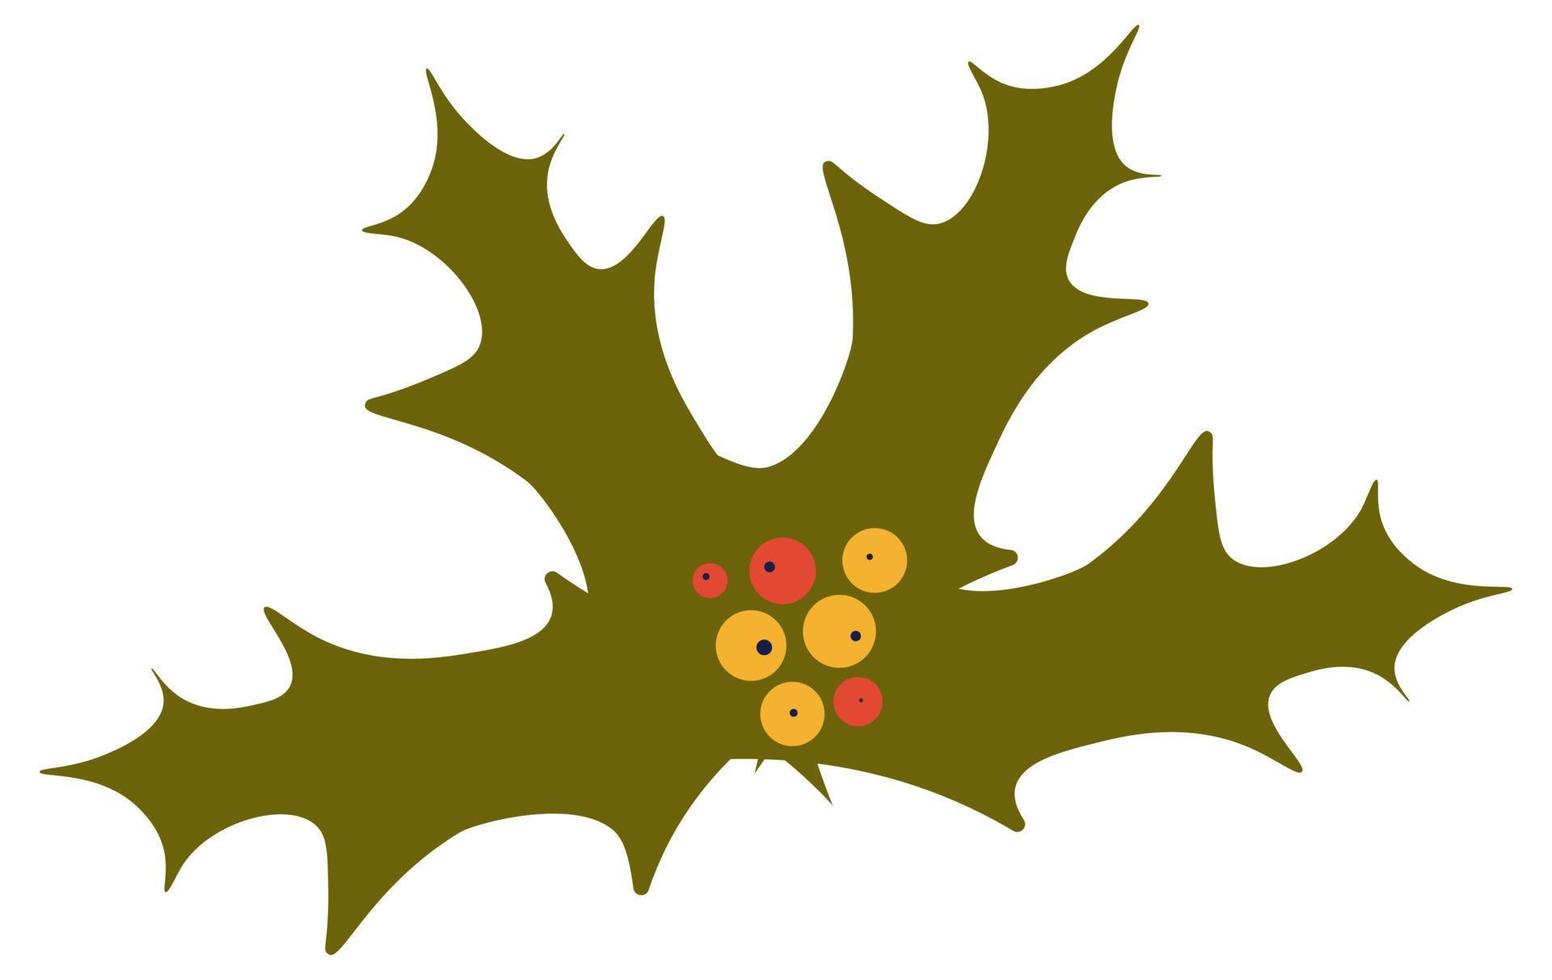 Mistletoe plant with berries, leaf symbol of xmas vector